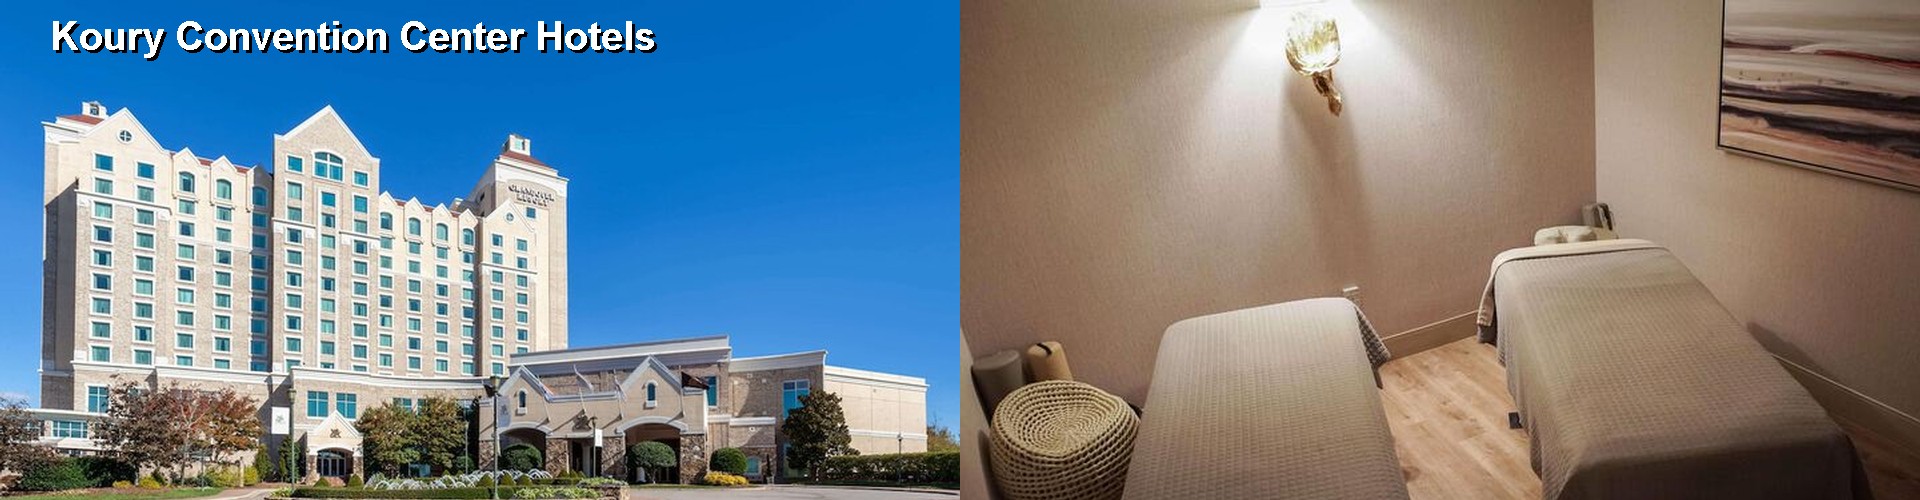 3 Best Hotels near Koury Convention Center